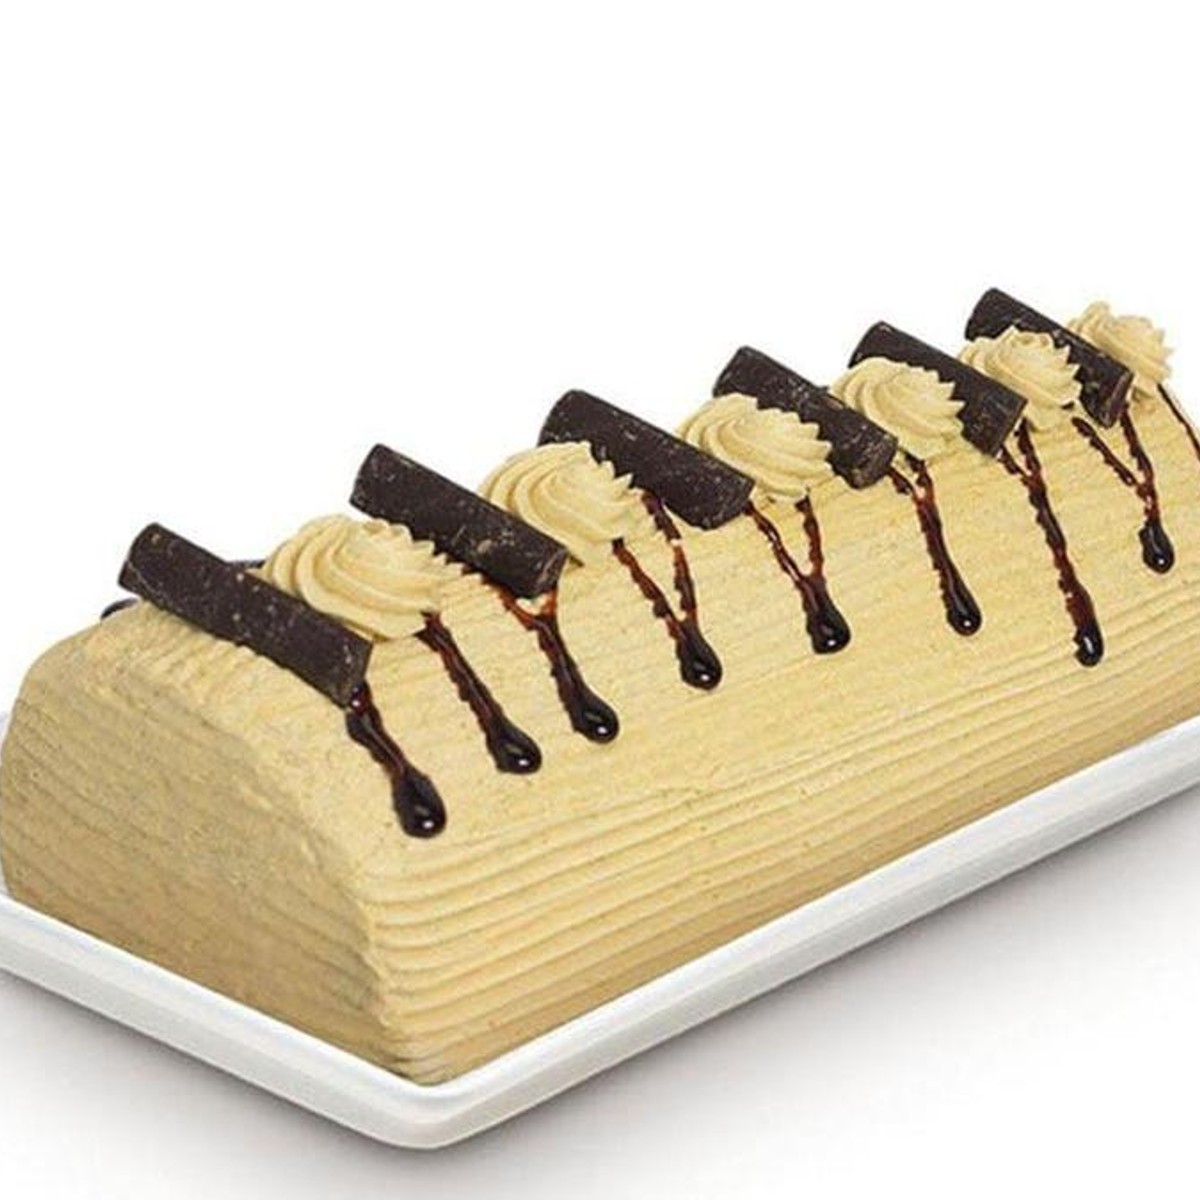 Red Ribbon Cake 2023; Dedication Rolls Pastries Empanadas Types Fluffy  Texture - Arad Branding